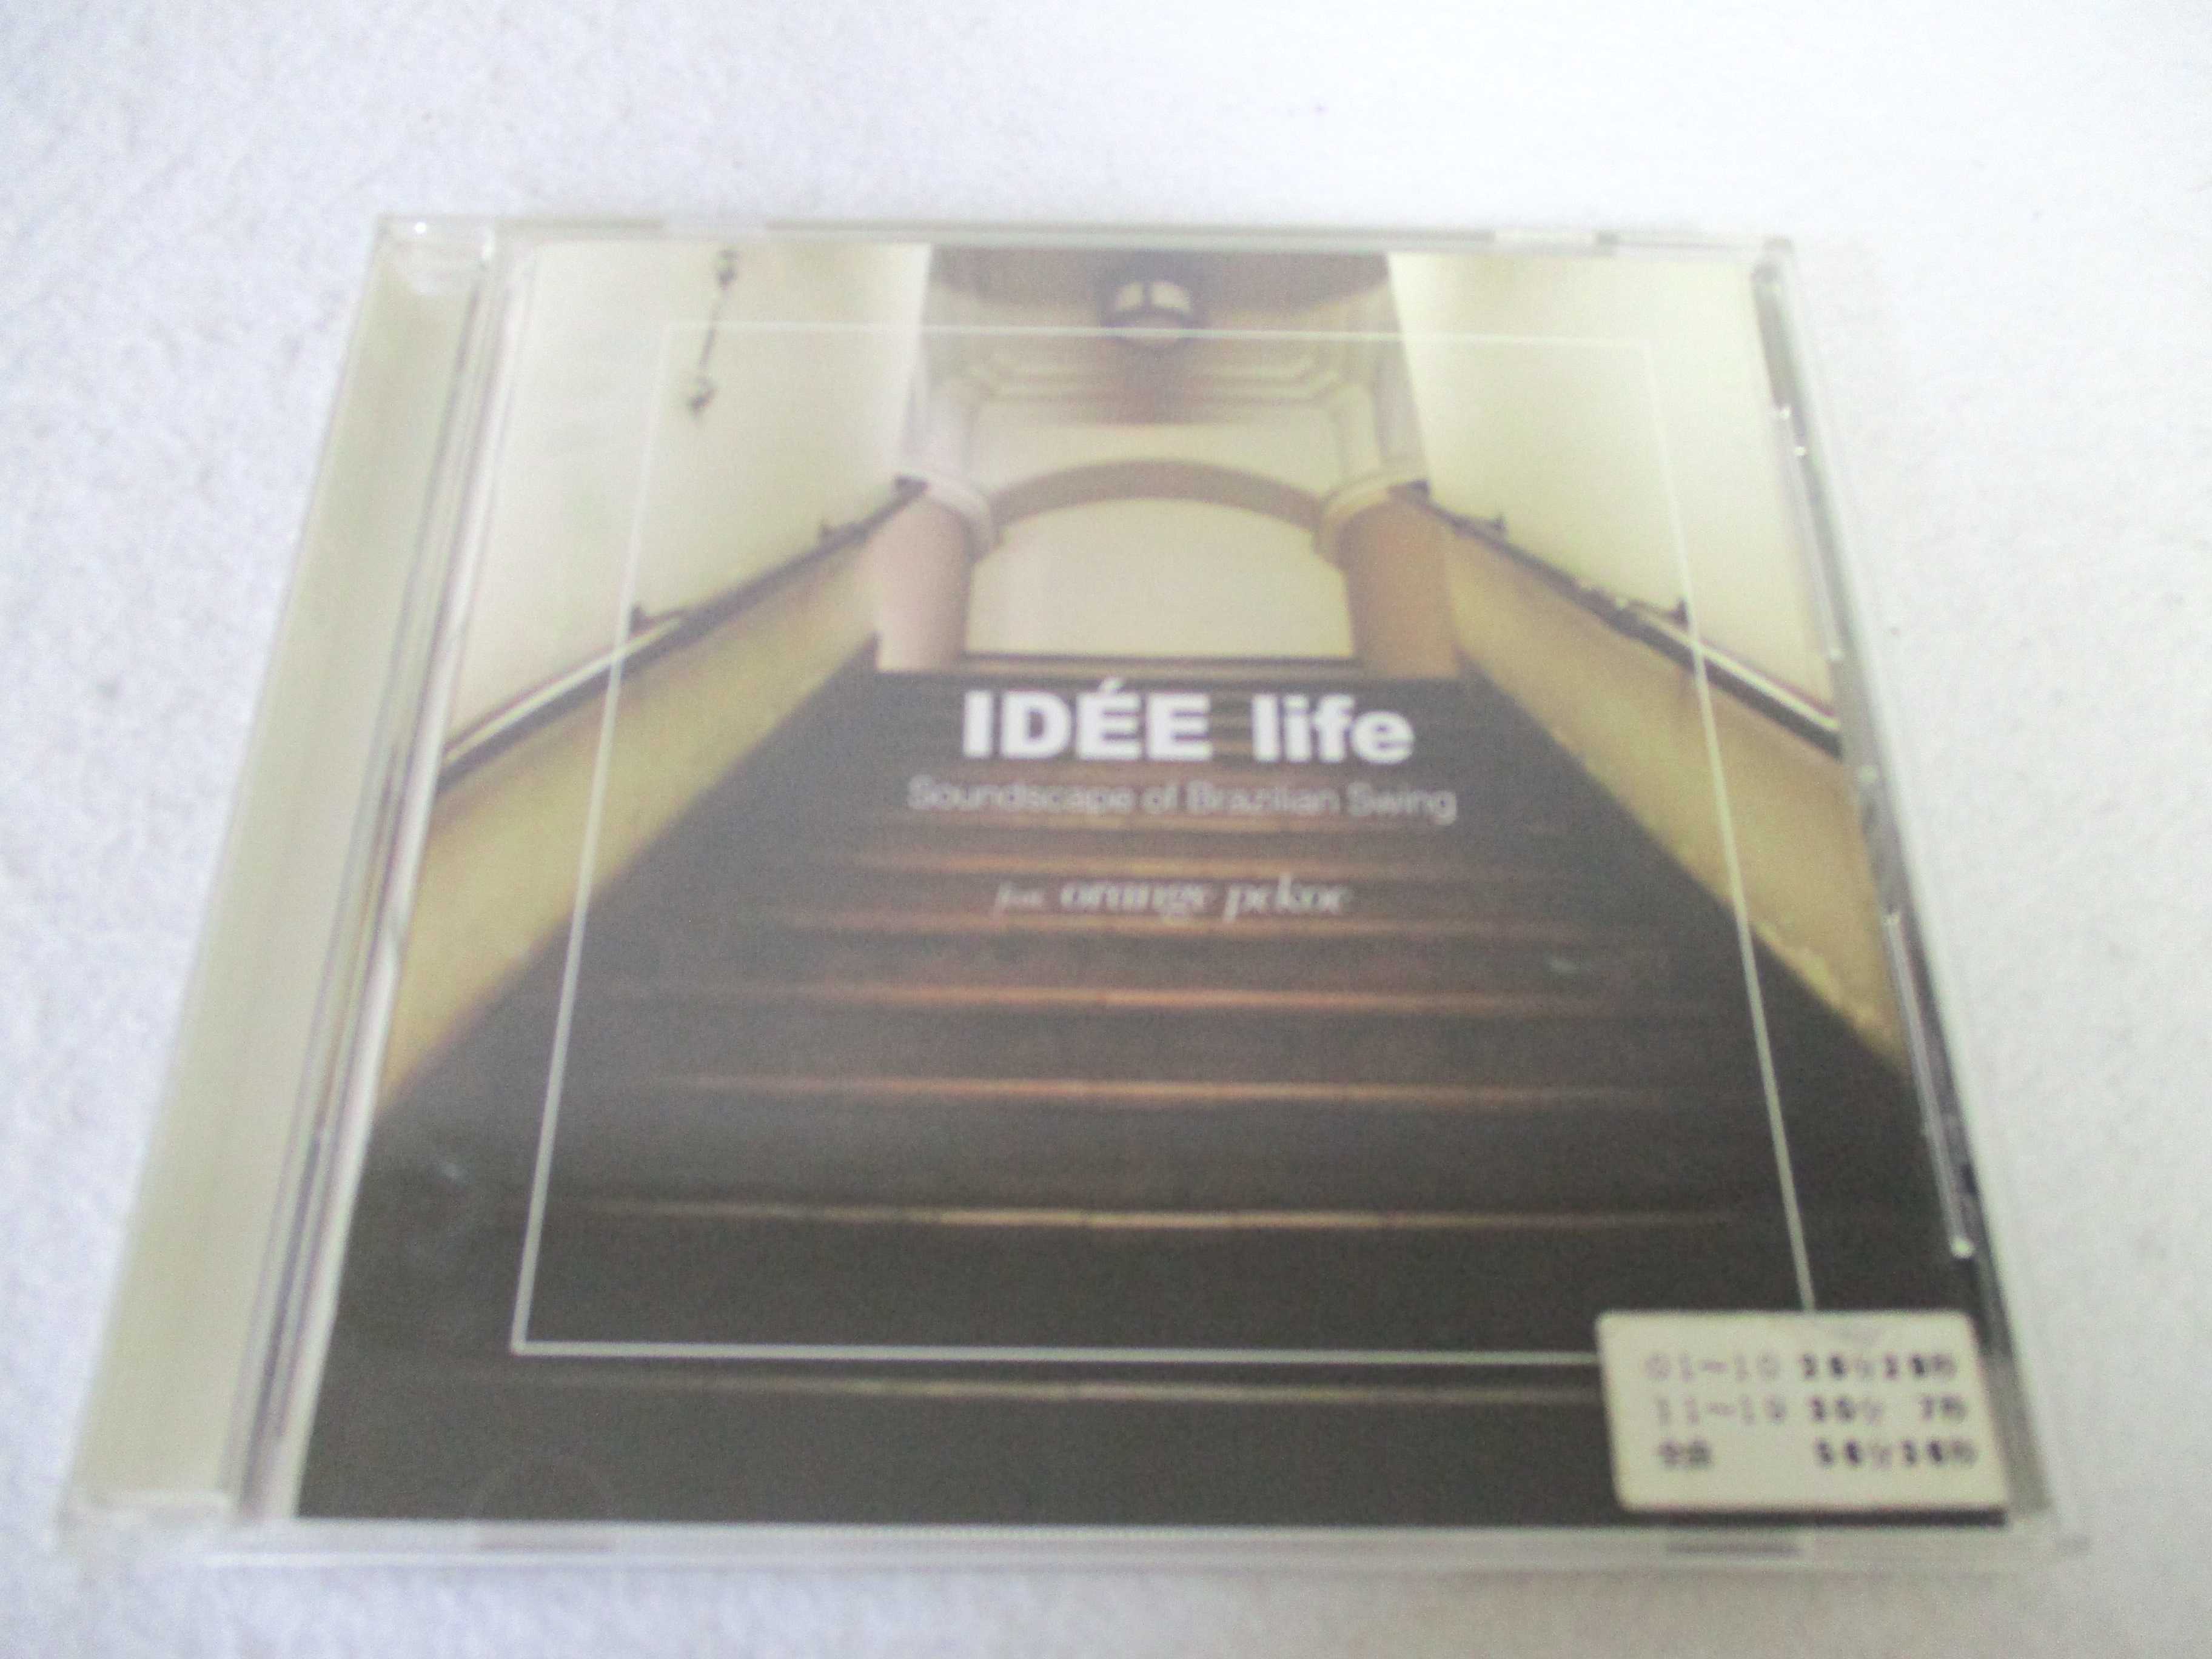 AC05212 【中古】 【CD】 IDEE life Soundscape of BrazilianSwing feat. Orange Pecoe/オムニバス